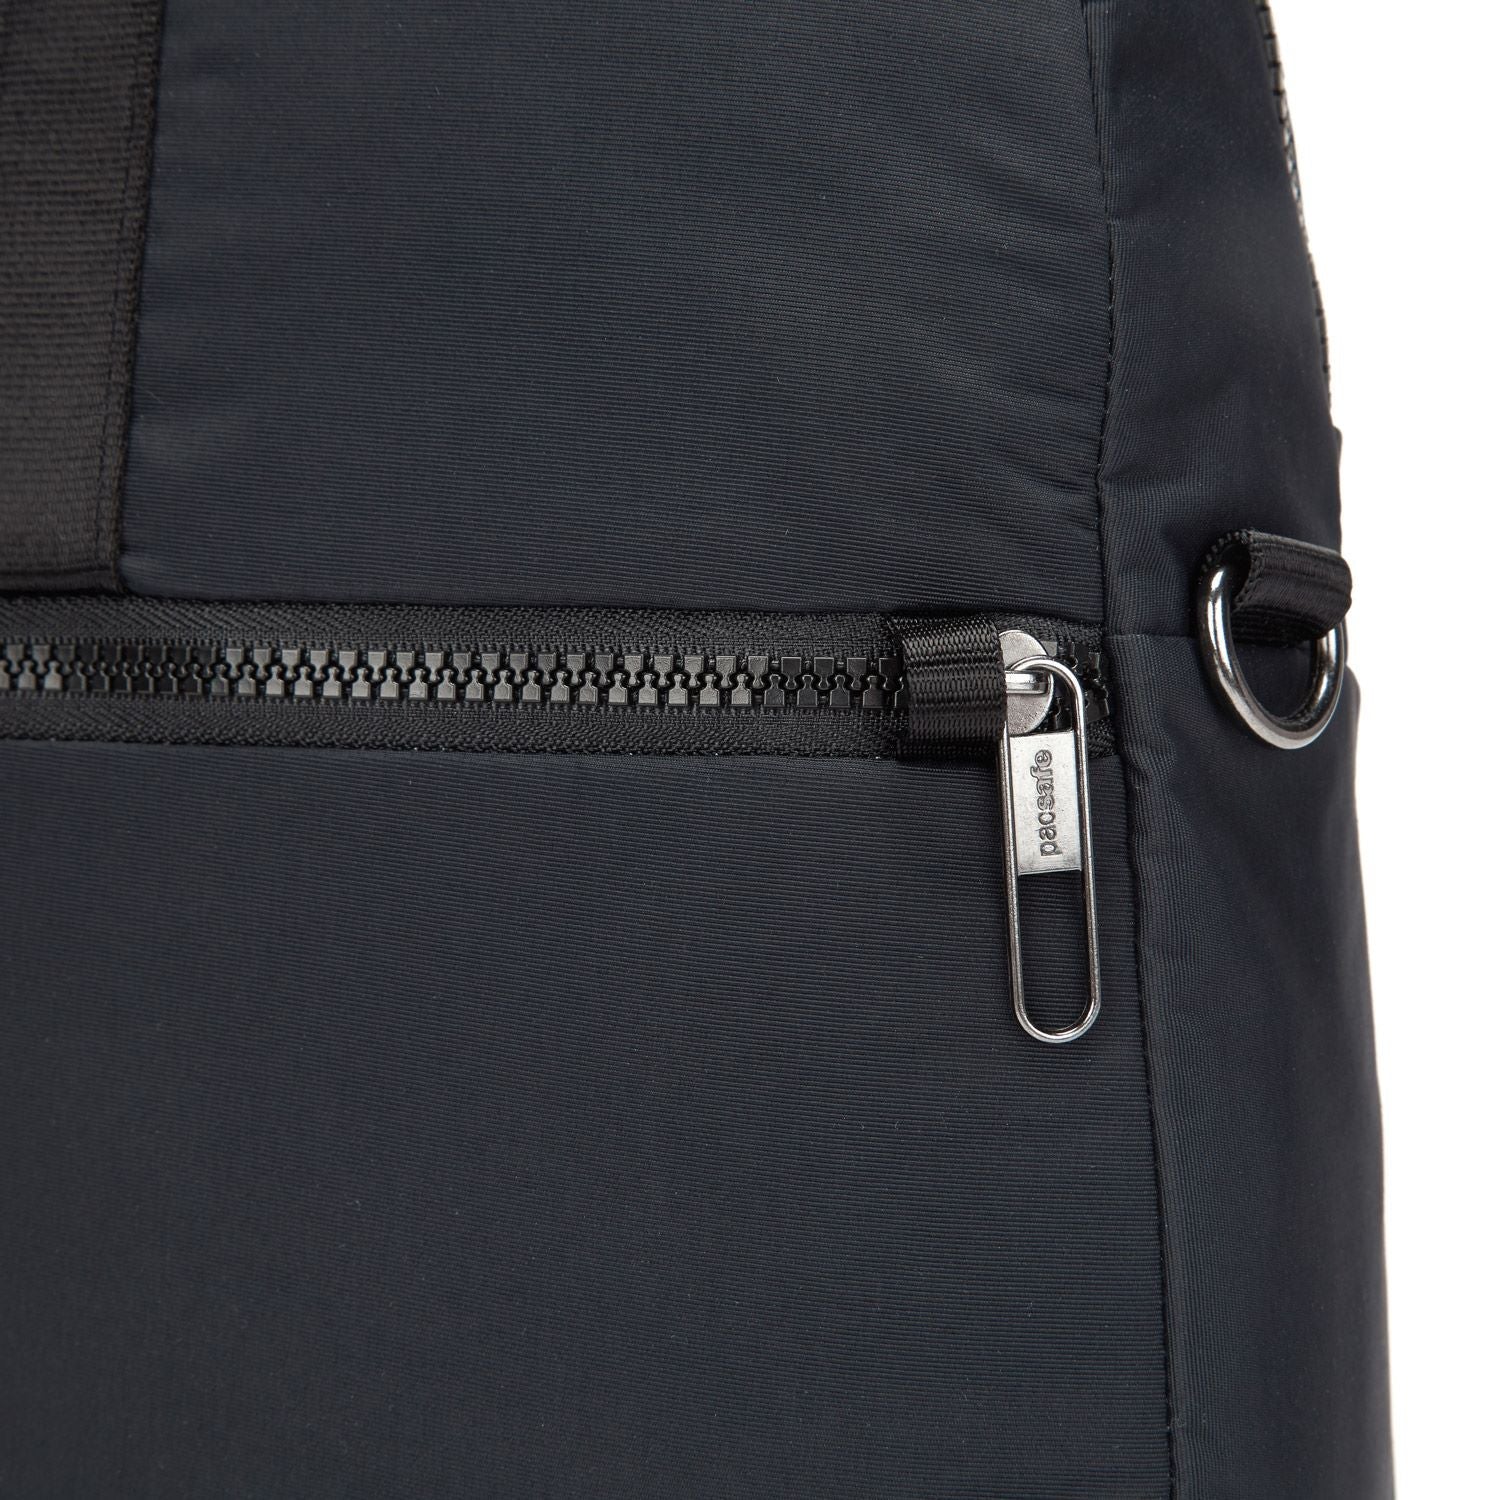 Pacsafe - CX Convertible Backpack - Black-12